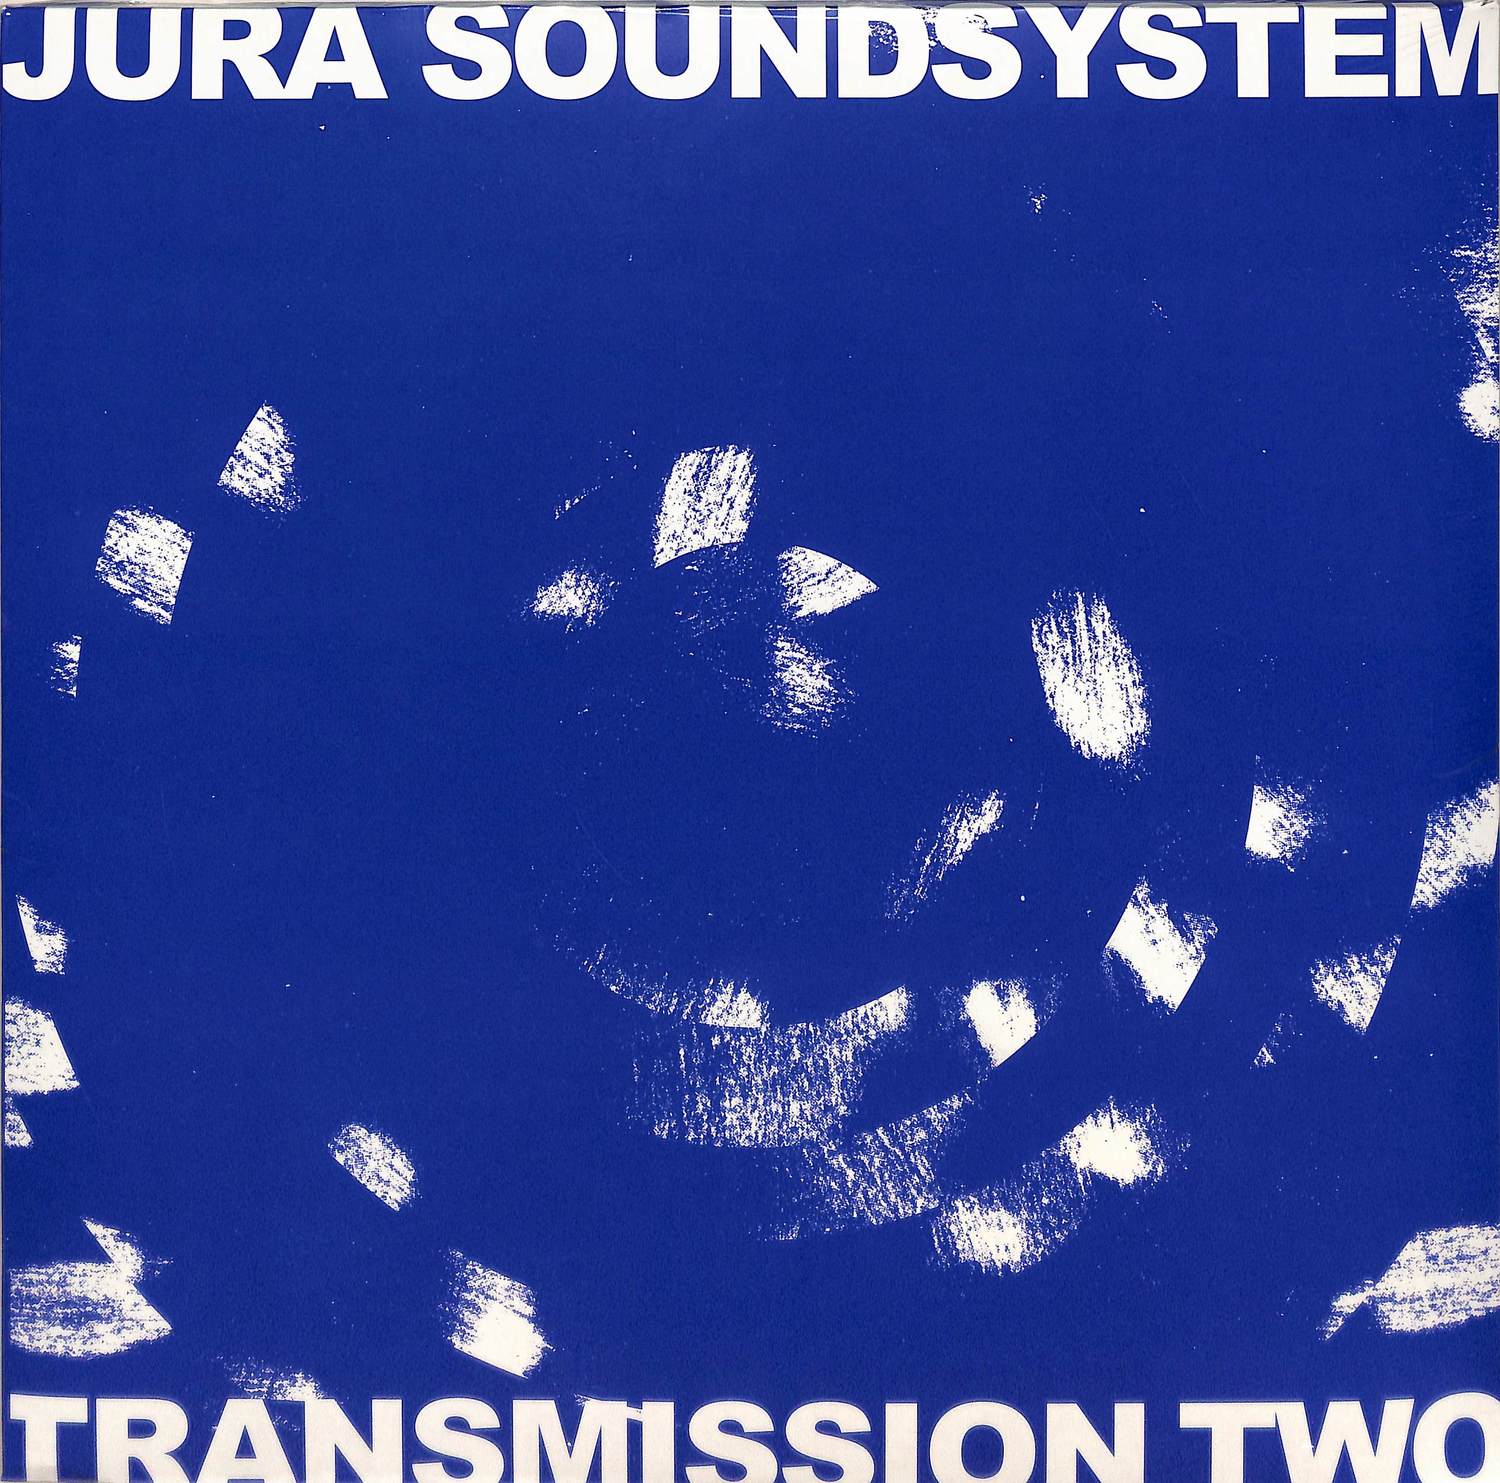 VARIOUS ARTISTS - JURA SOUNDSYSTEM PRESENTS TRANSMISSION TWO 